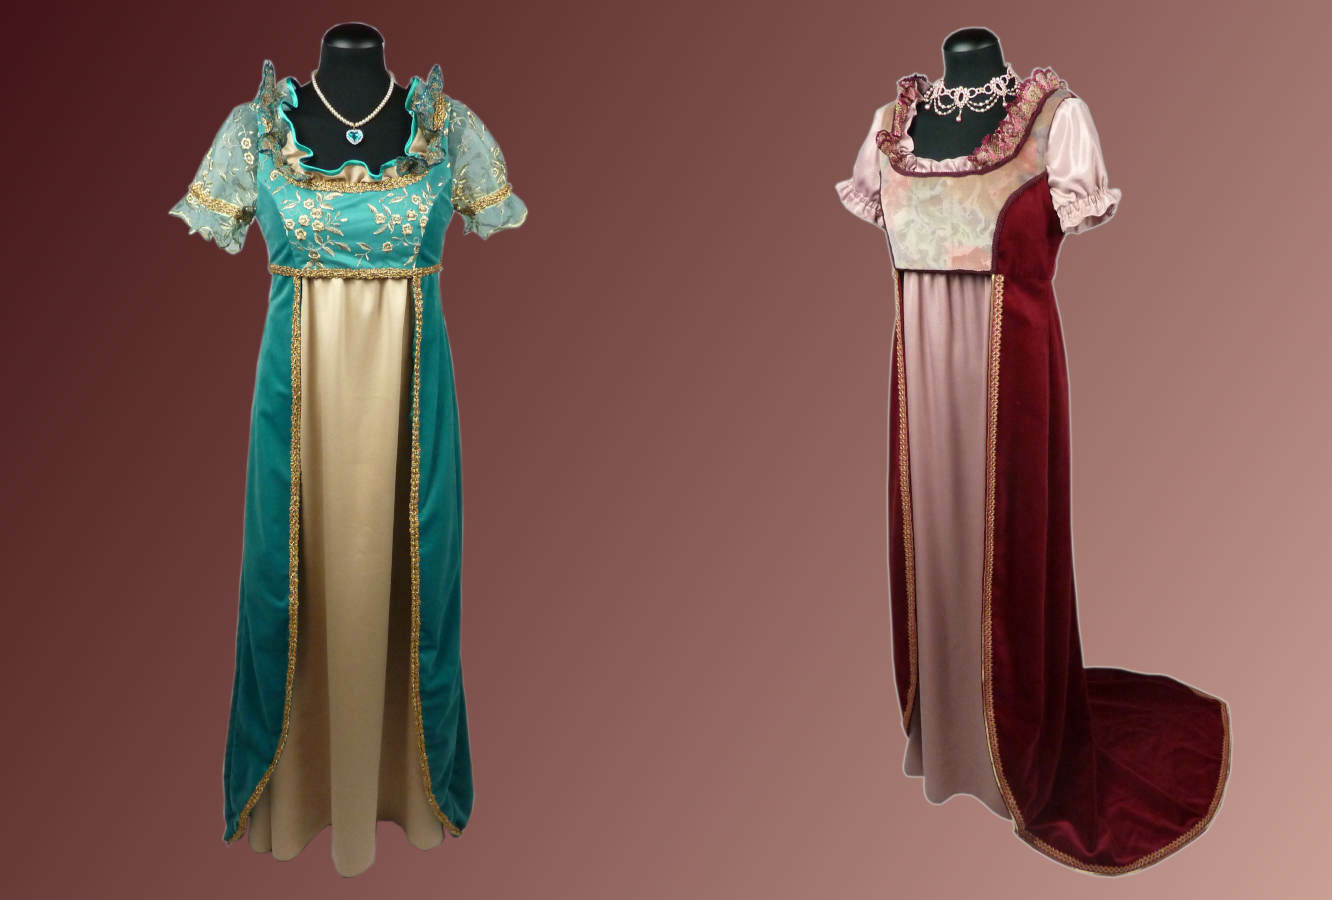 josephine de beauharnais, keizerin, koningin, historisch, historisch kostuum, napoleon, napoleon bonaparte, frans, frankrijk